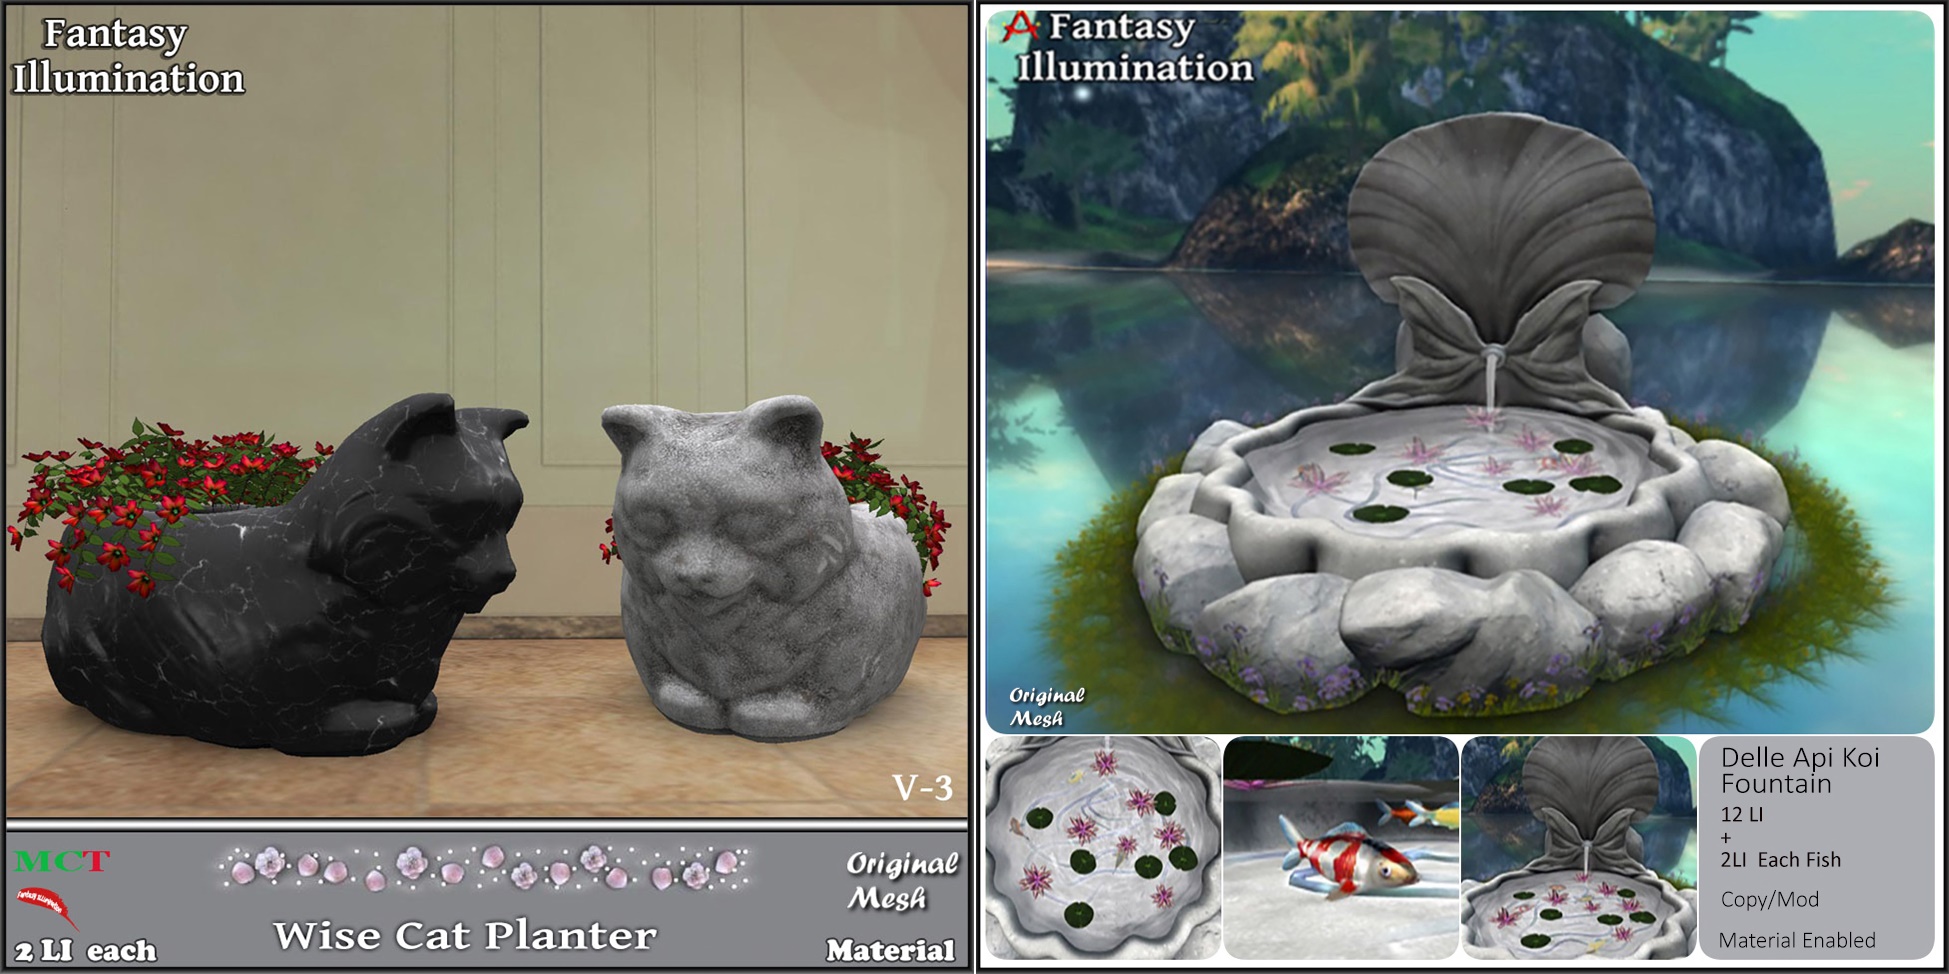 Fantasy Illumination – Wise Cat Planter & Delle Api Koi Fountain